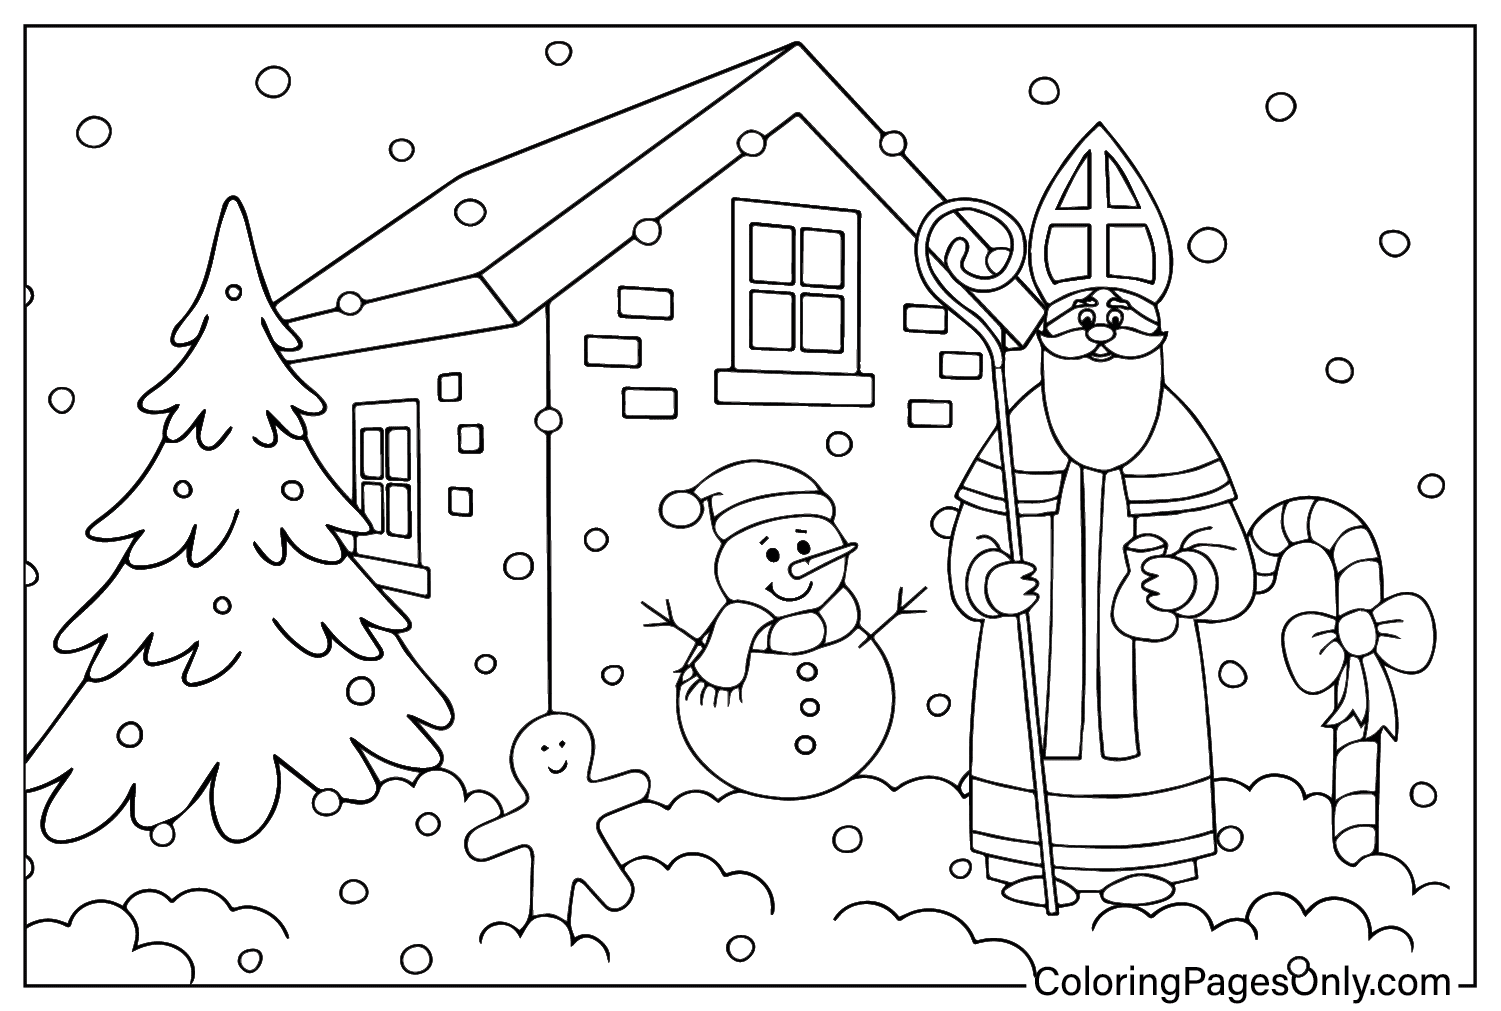 Coloriage de Saint Nicolas et bonhomme de neige de la Saint-Nicolas